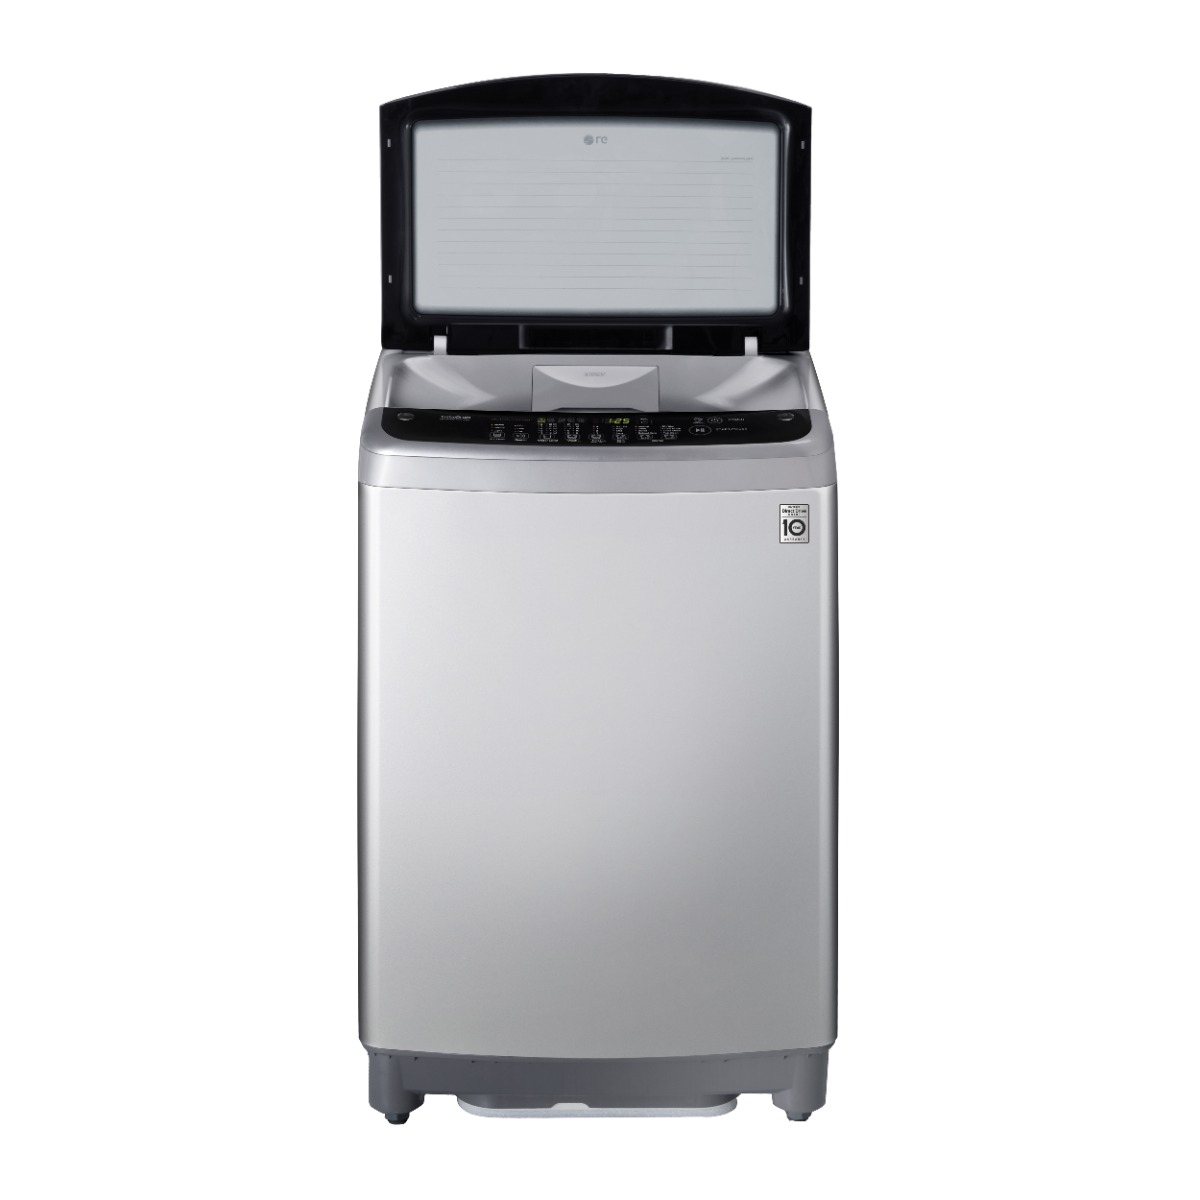 LG Top Load Automatic Washing Machine, 14 Kg, Inverter Motor, Silver - T1466NEHGU